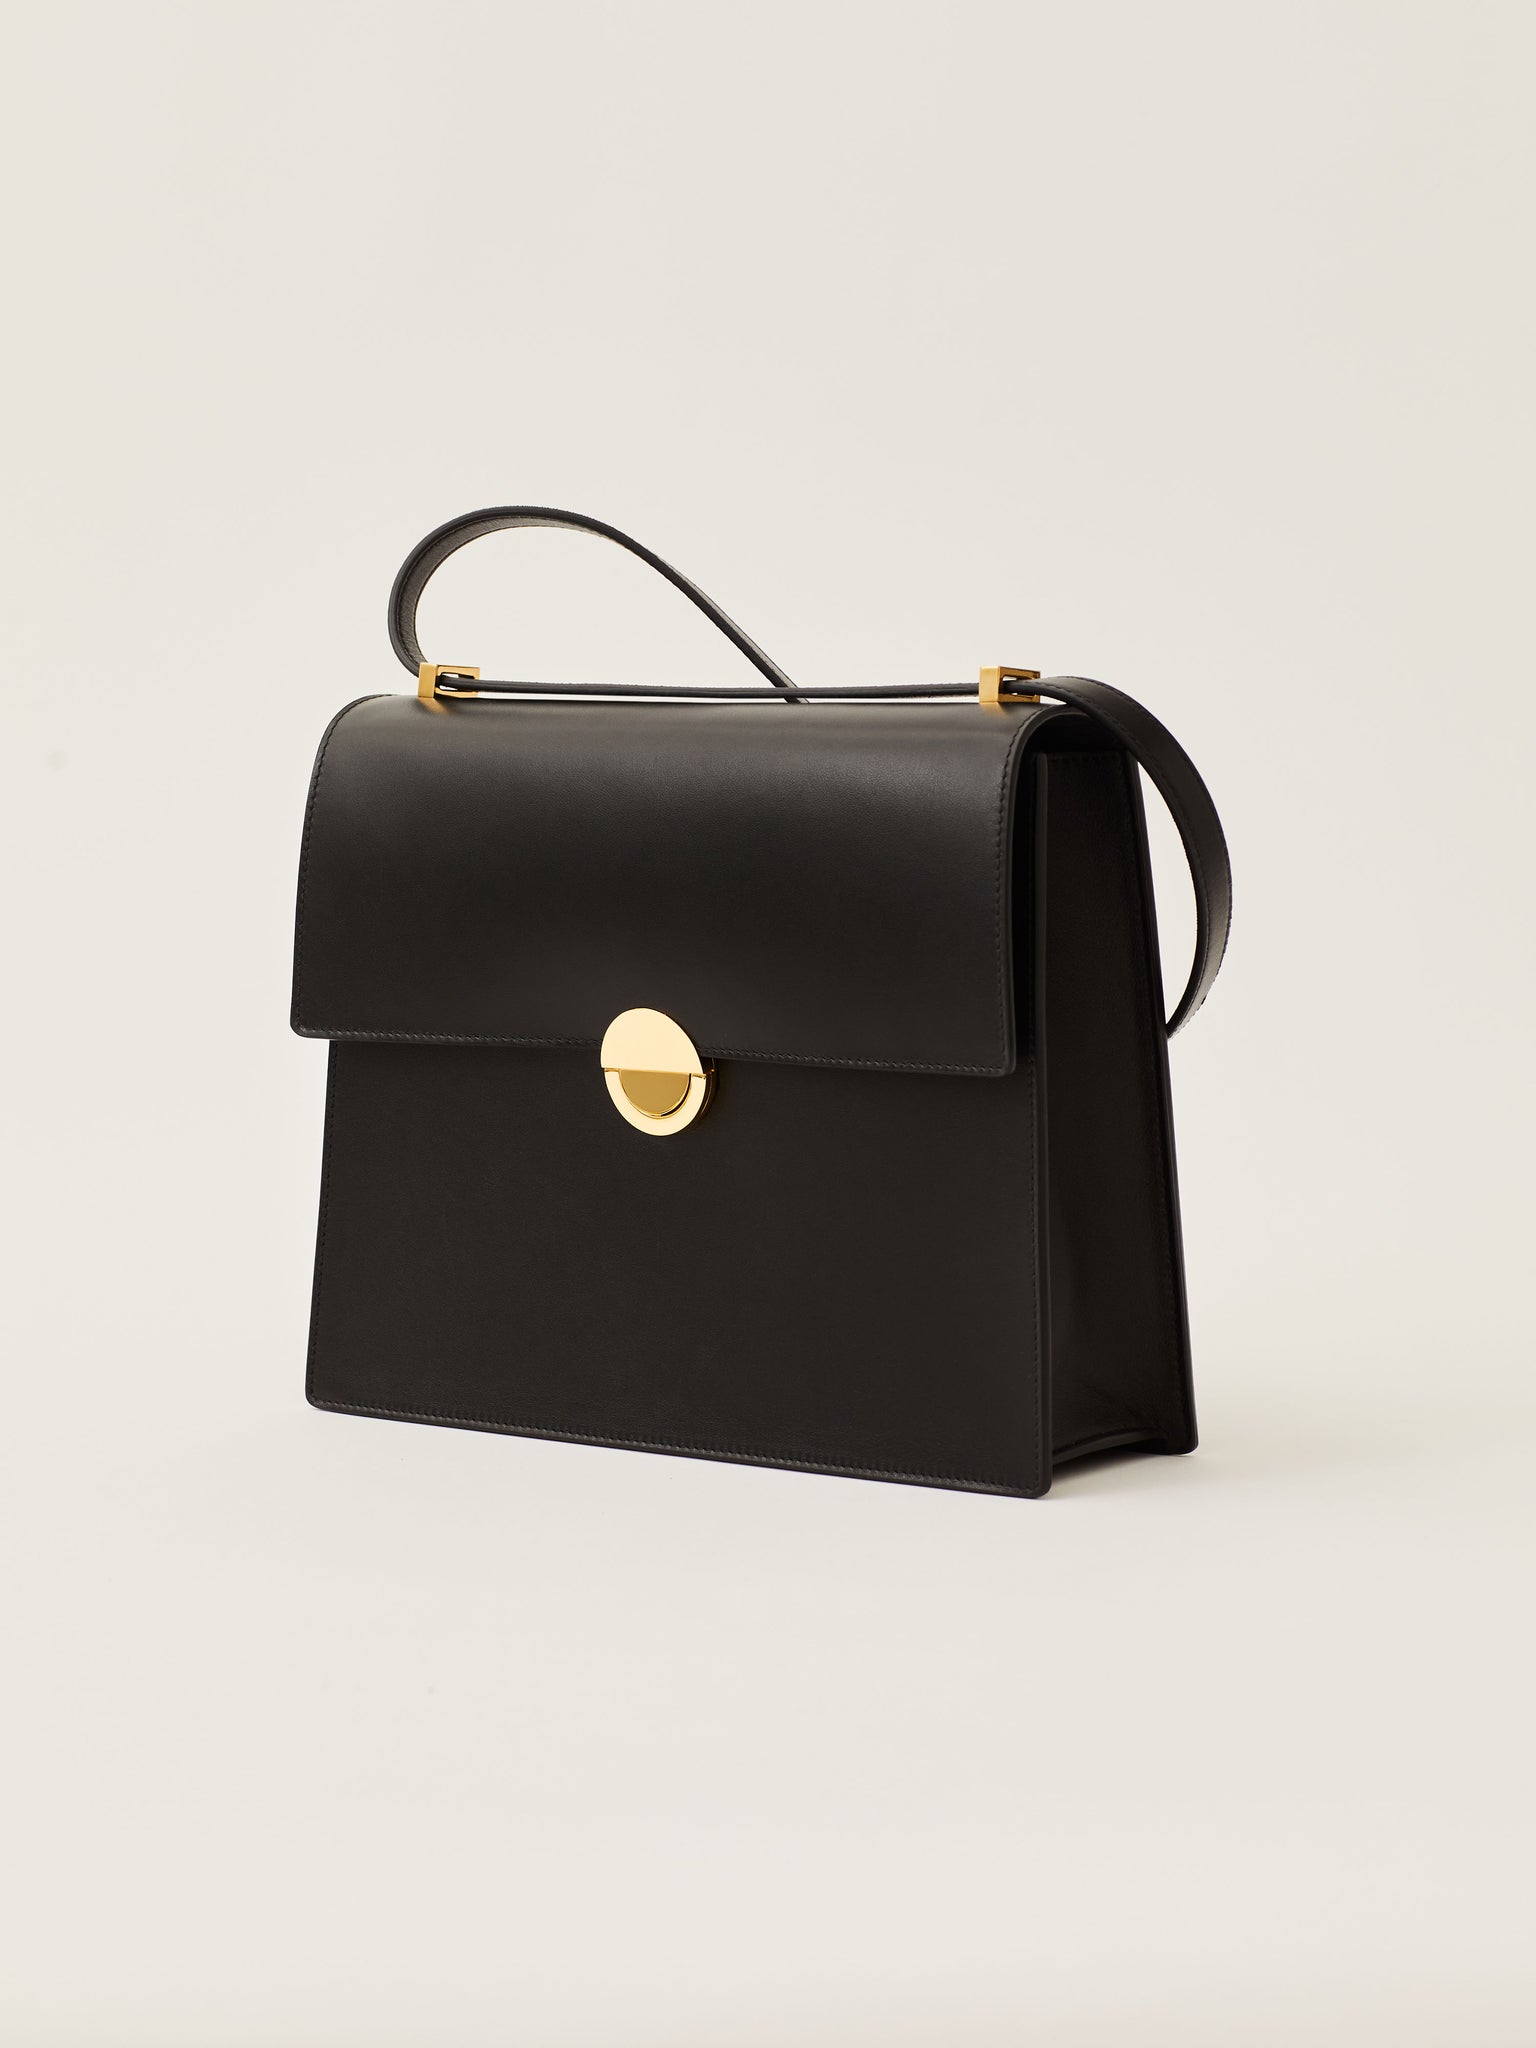 Objets Daso Black Leather Hye Handbag: Profile View with Draped Shoulder Strap